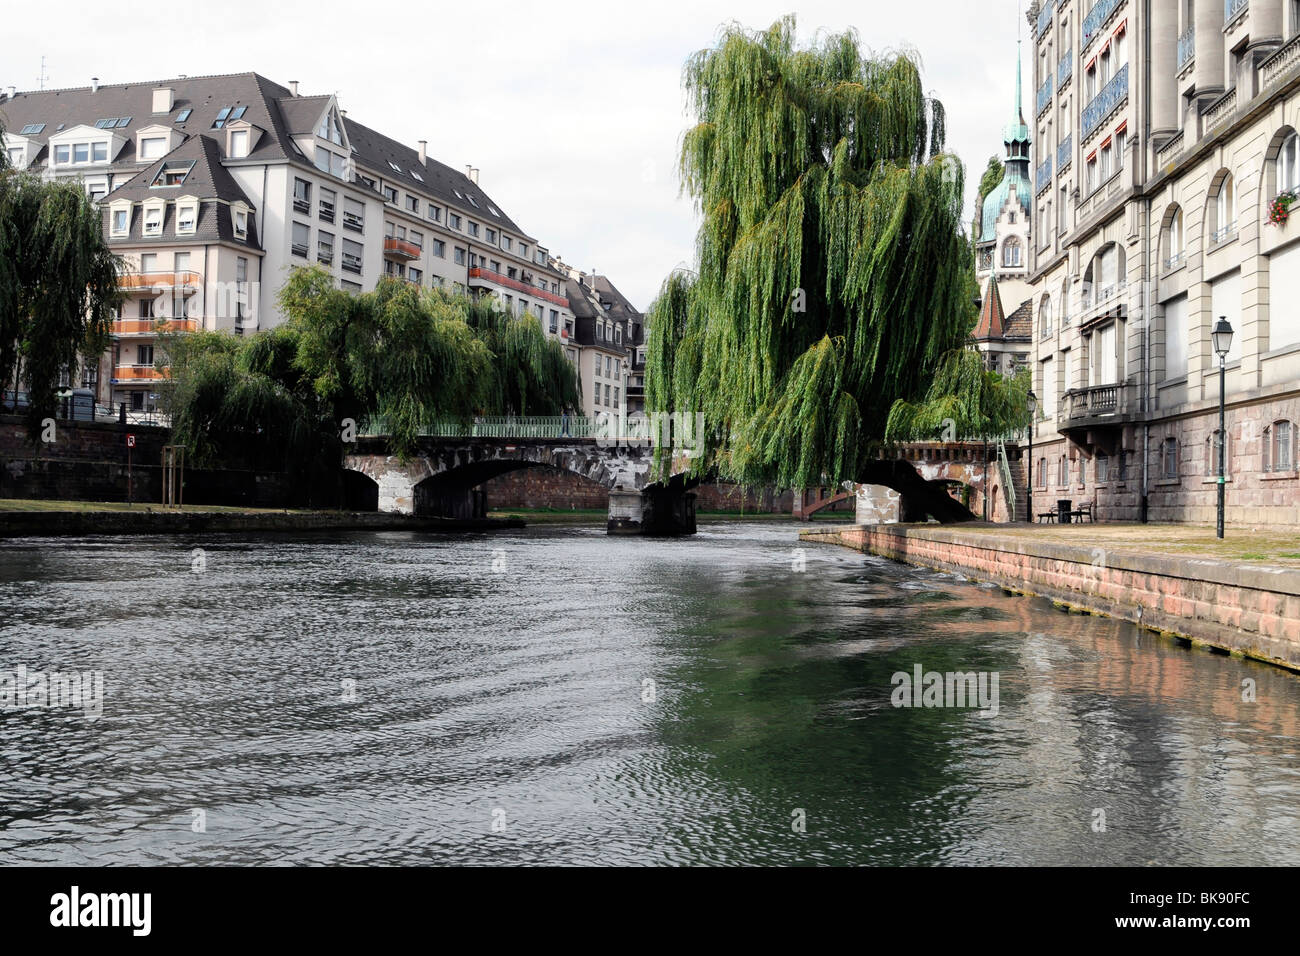 Bootsfahrt auf dem Fluss Ill, Straßburg, Elsass, Frankreich, Europa Stockfoto